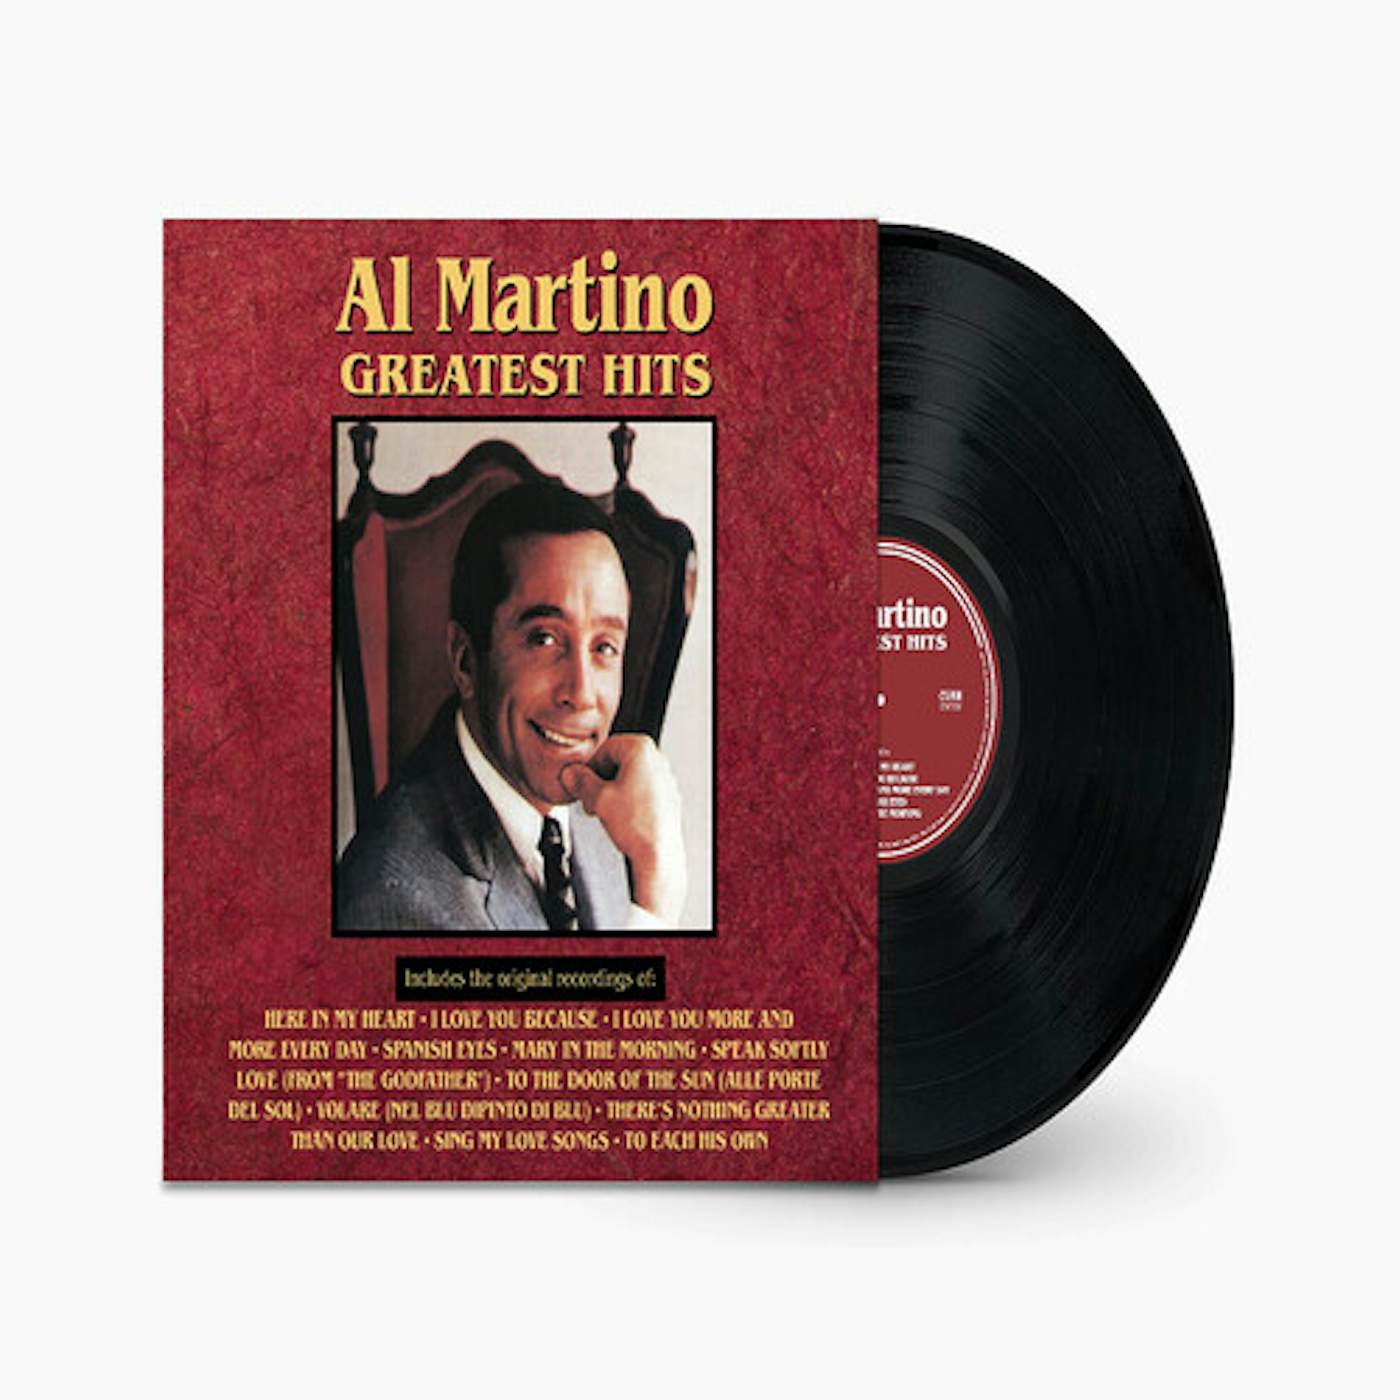 Al Martino GREATEST HITS Vinyl Record